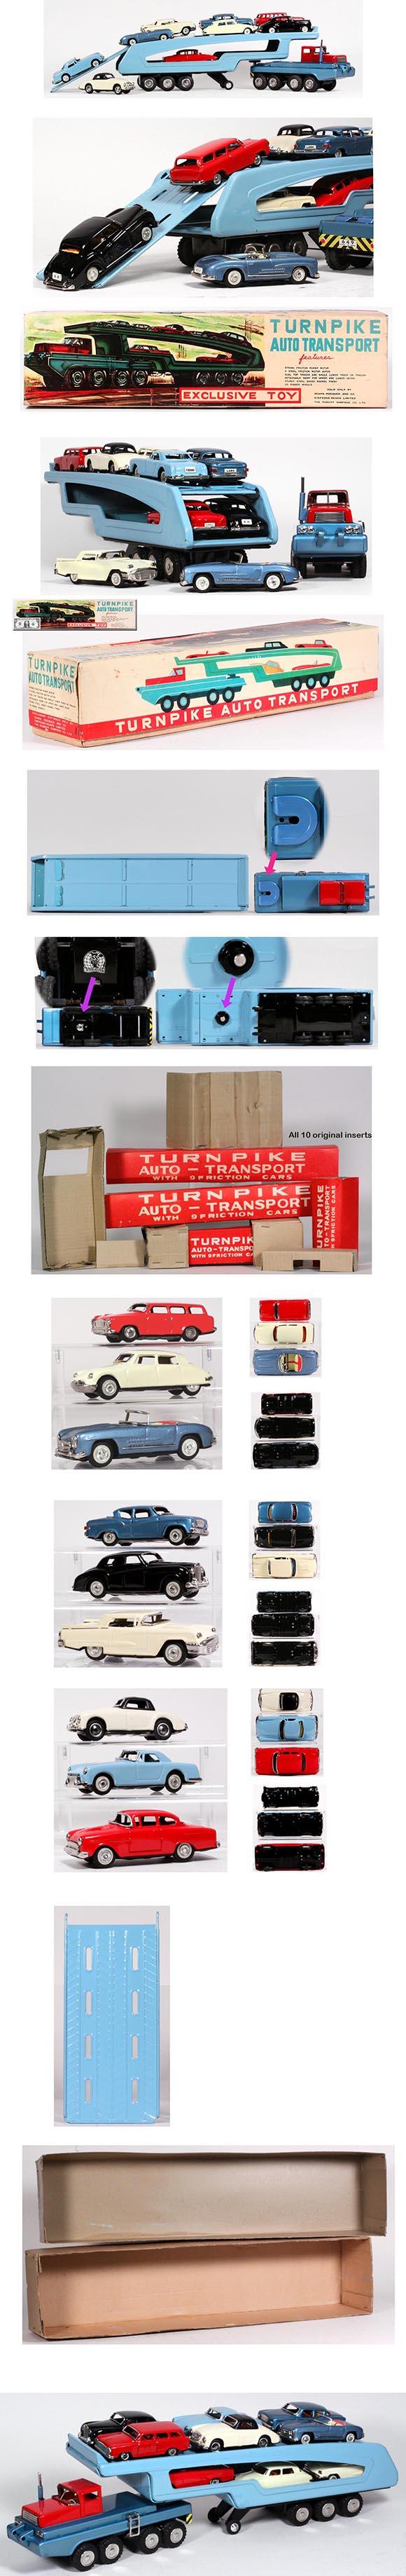 1962 Shioji, Sears Turnpike Auto Transport in Original Box